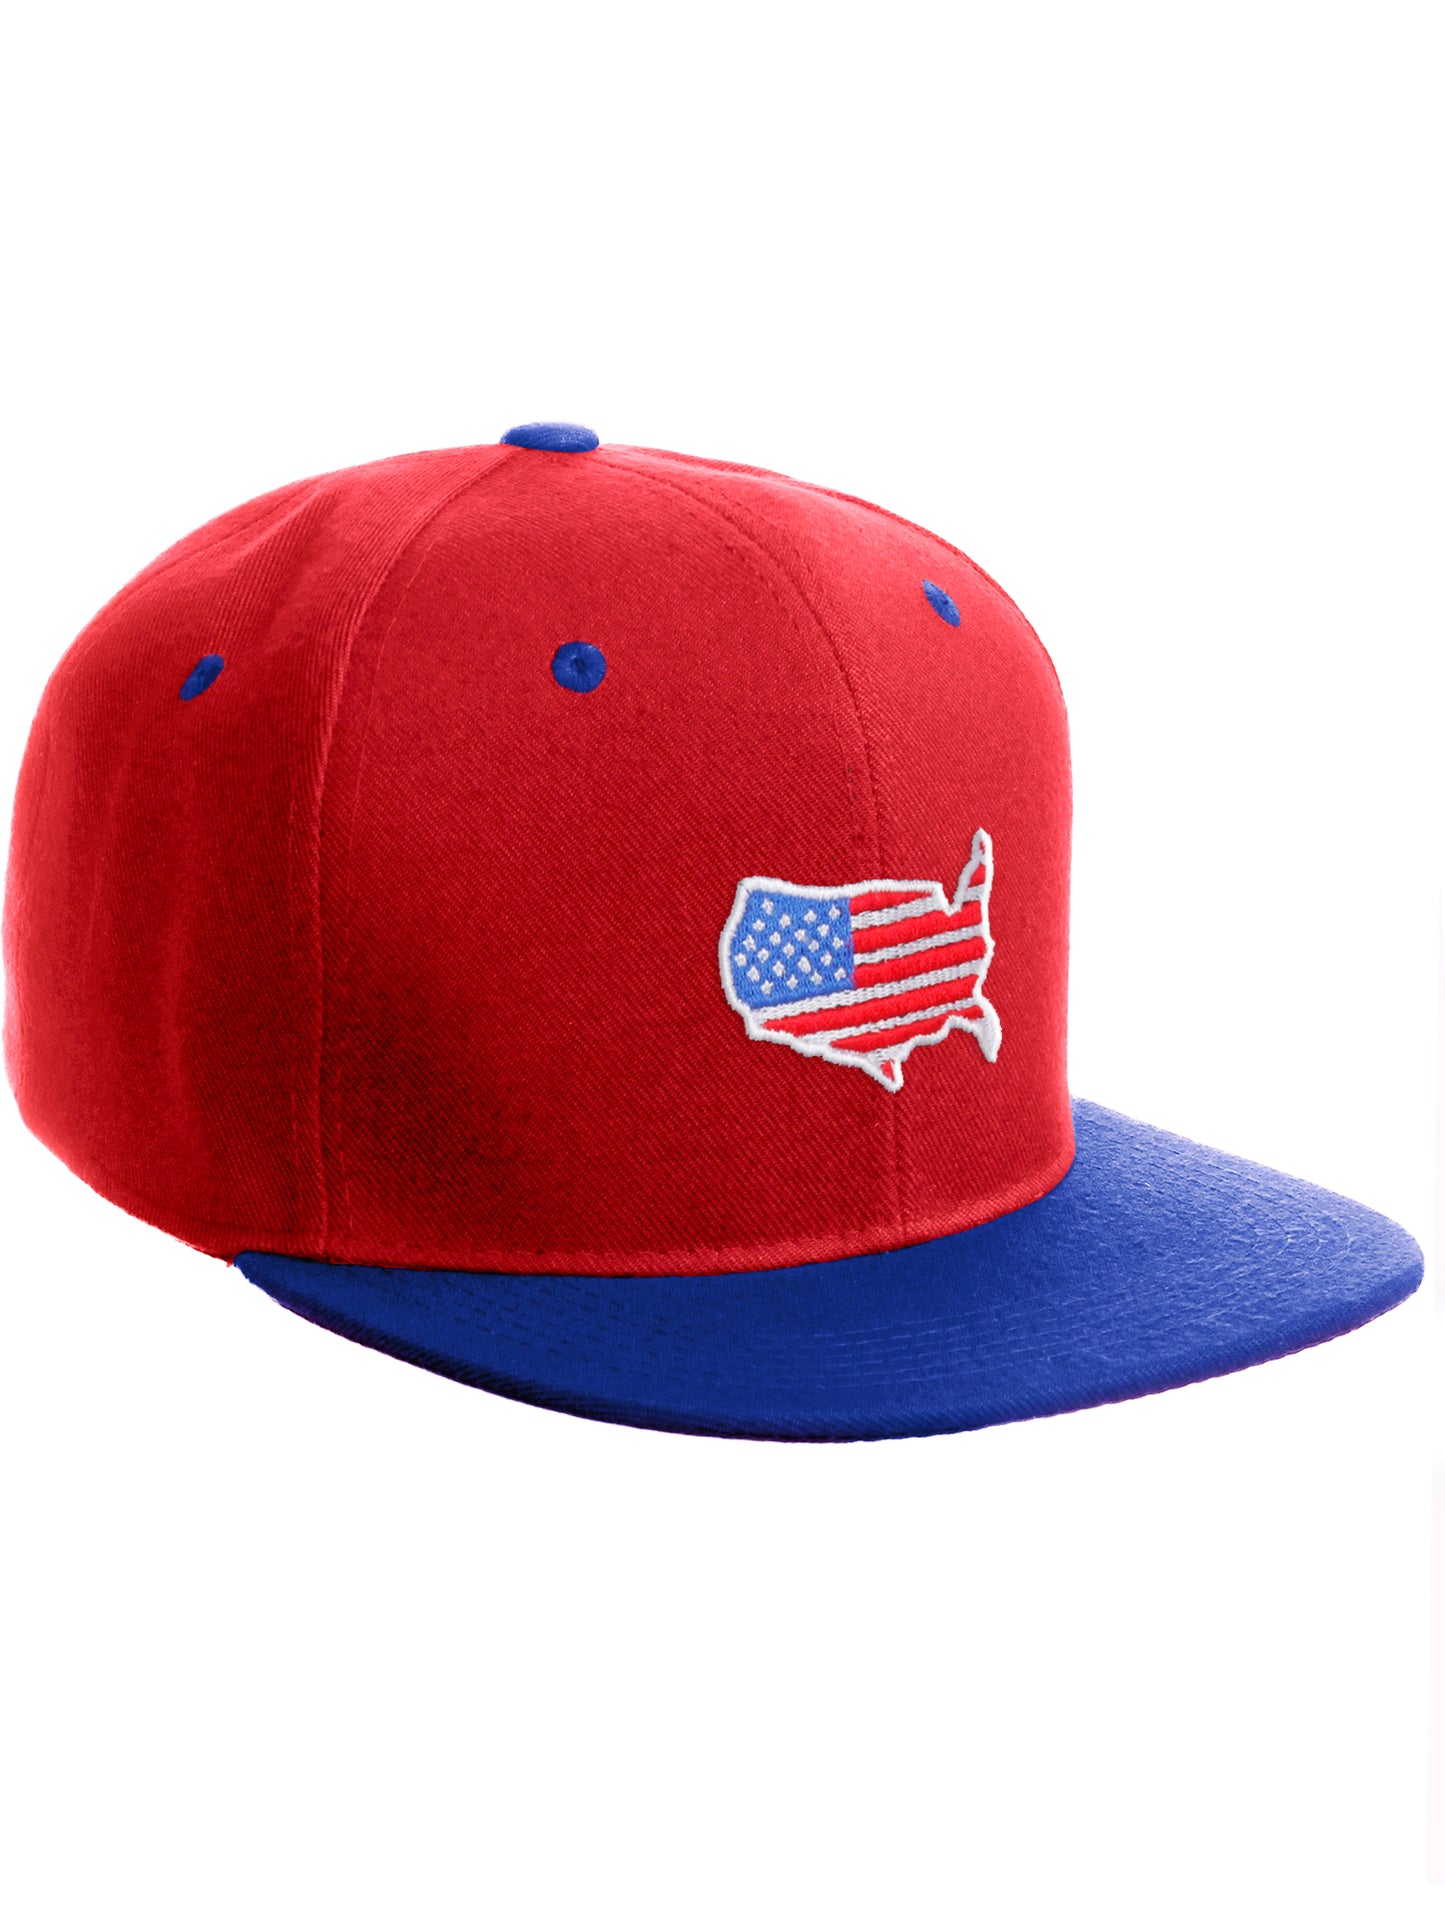 Daxton Embroidered USA Flag Snapback Flat Bill Hat Cap Adjustable Back